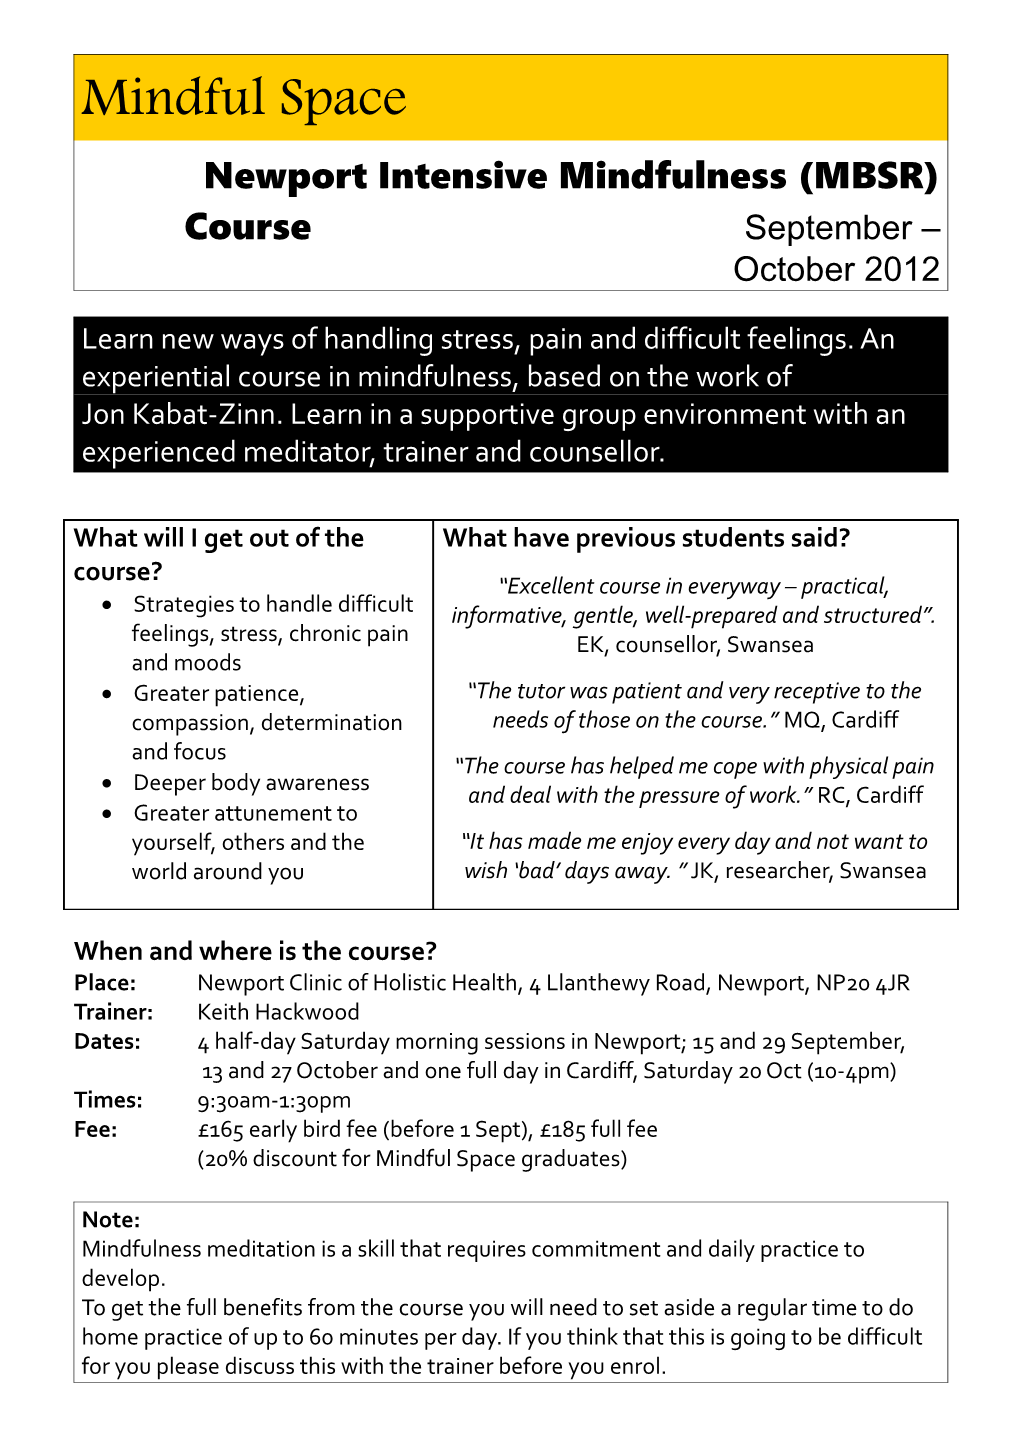 Newport Intensive Mindfulness (MBSR) Course September October 2012